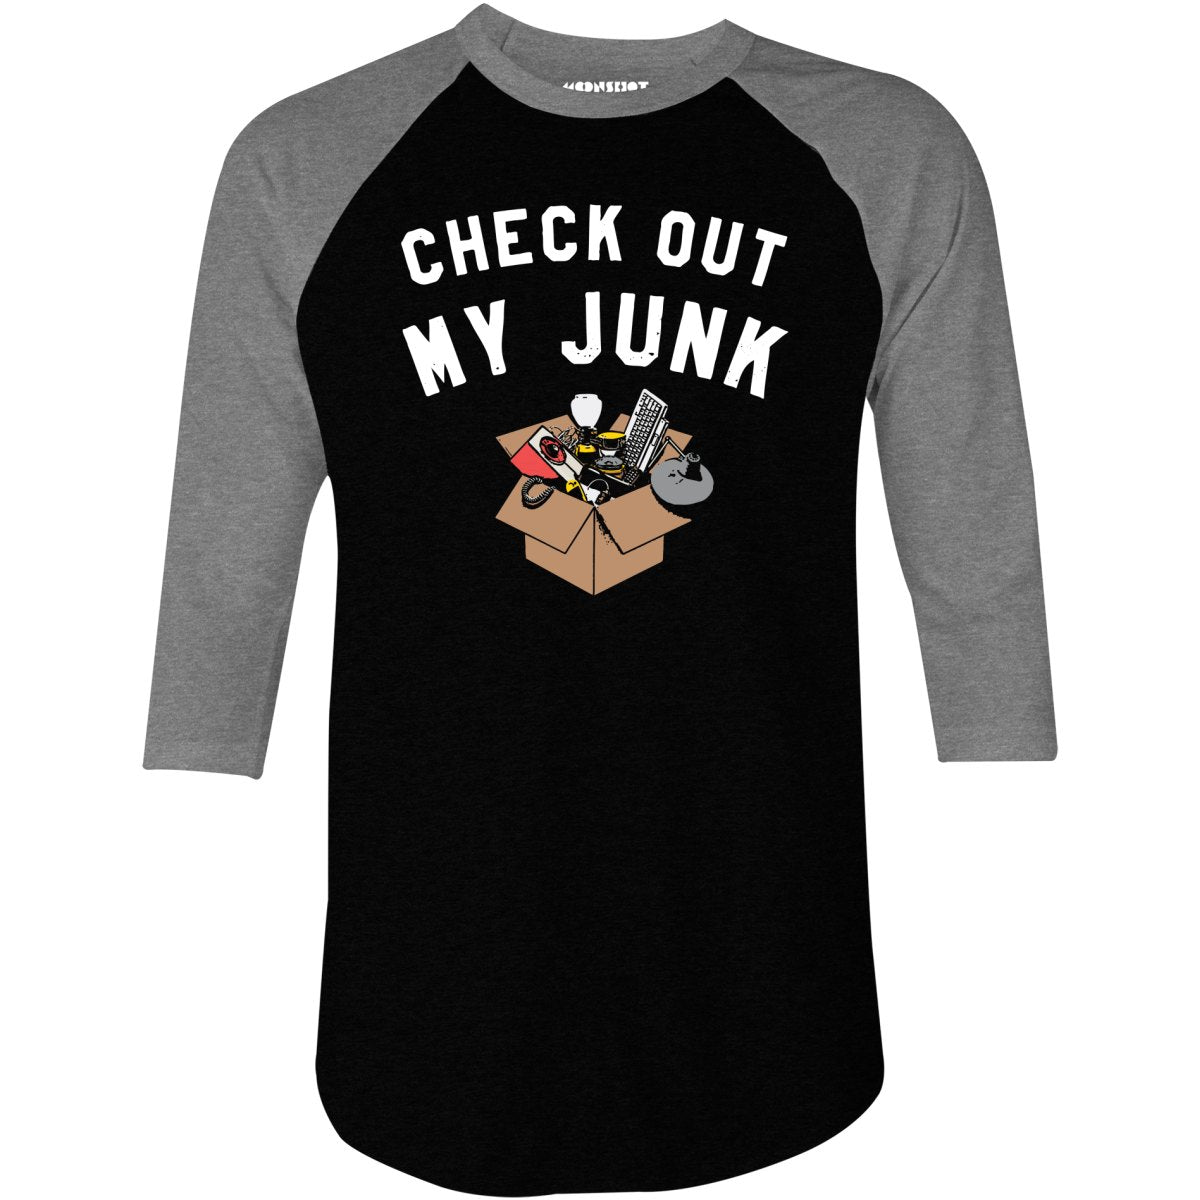 Check Out My Junk - 3/4 Sleeve Raglan T-Shirt